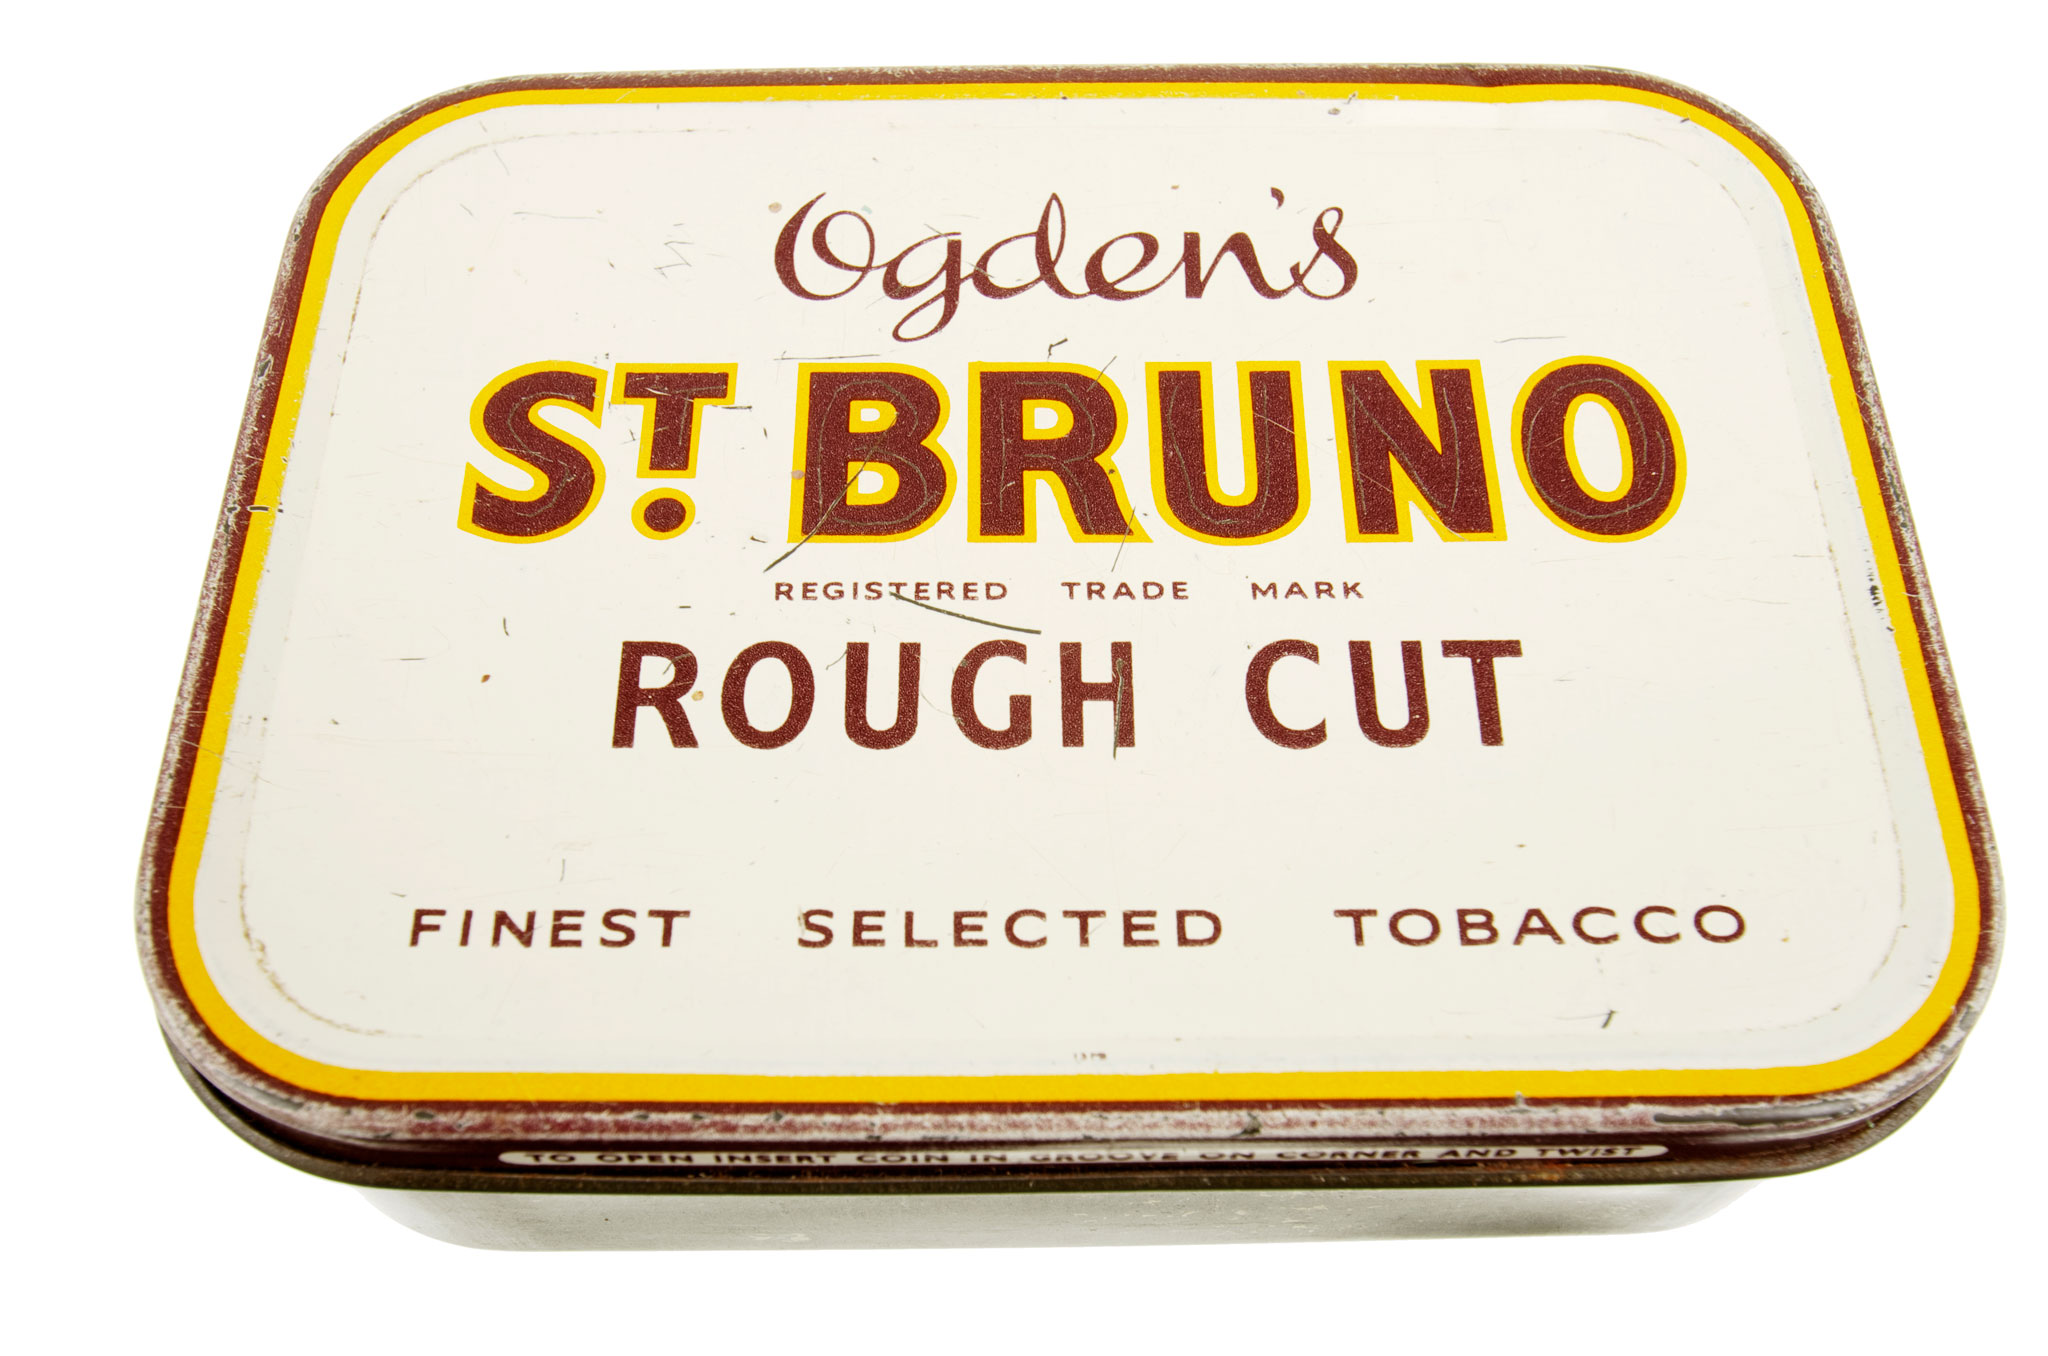 Ogden's St. Bruno Rough Cut